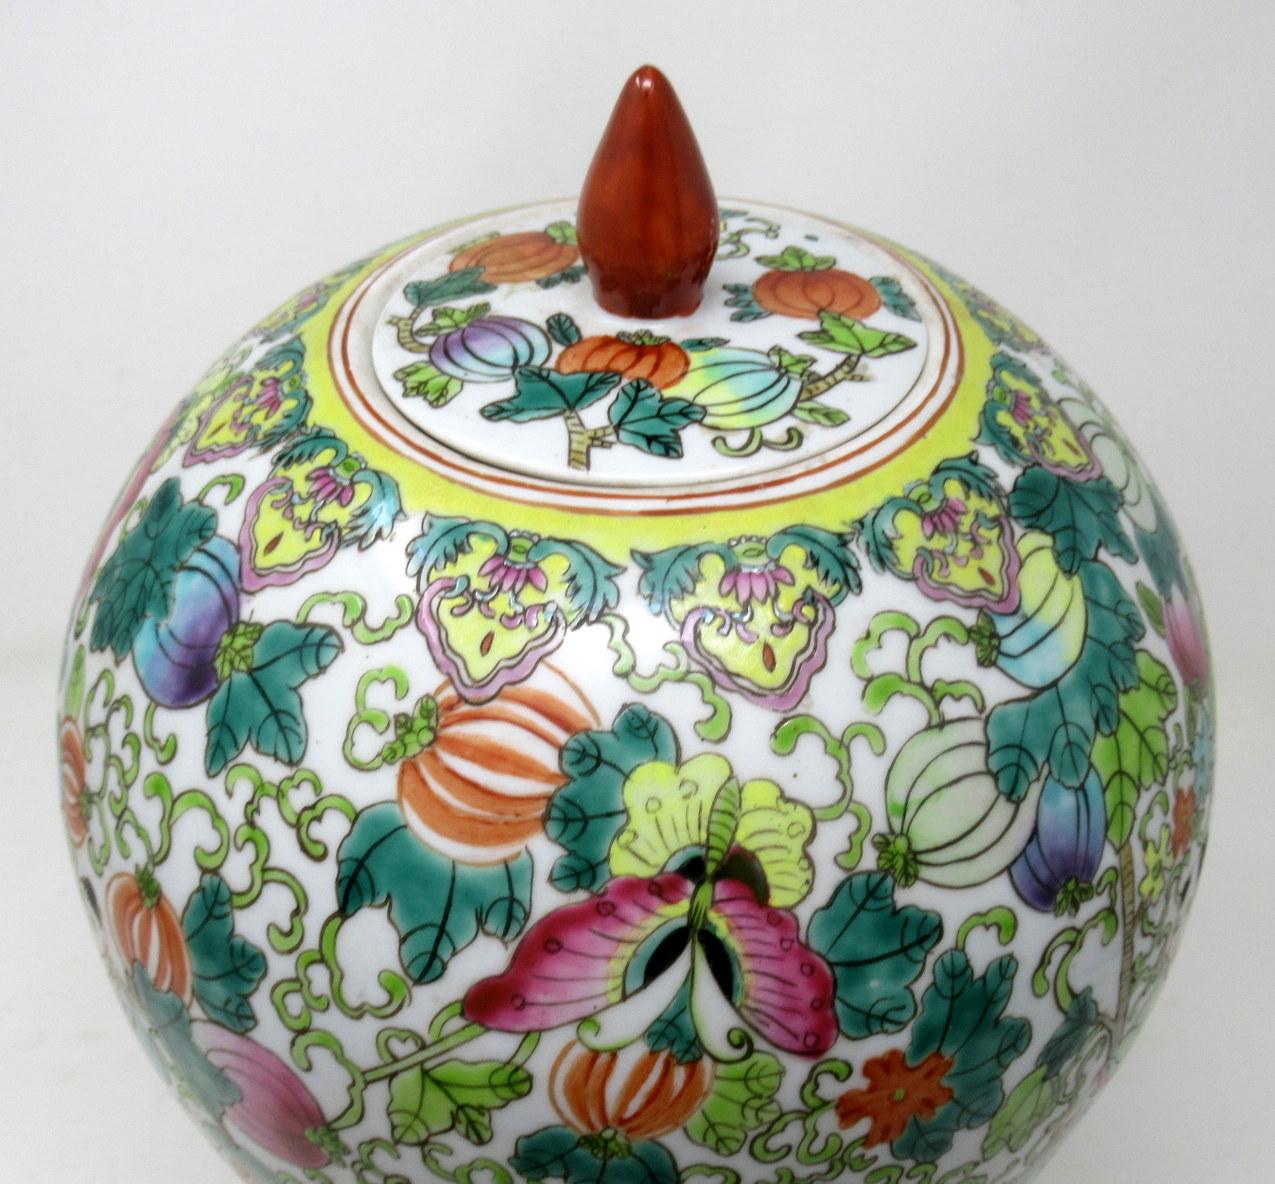 Antique Chinese Export Enameled Porcelain Ginger Jar Centerpiece Republic Period 1